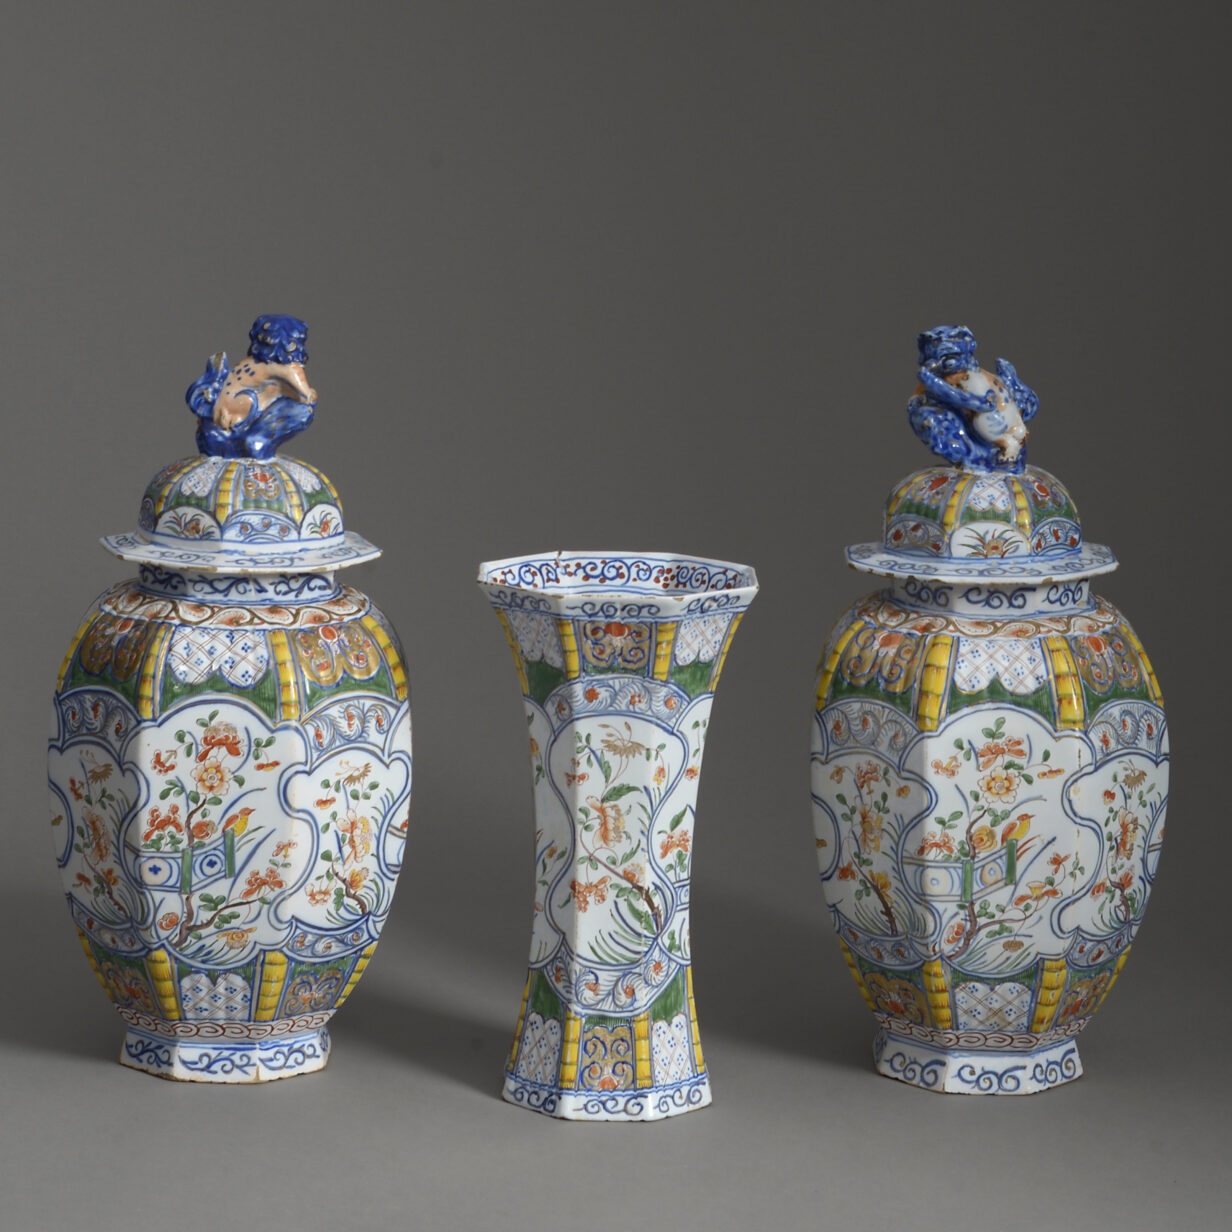 Three delft vases